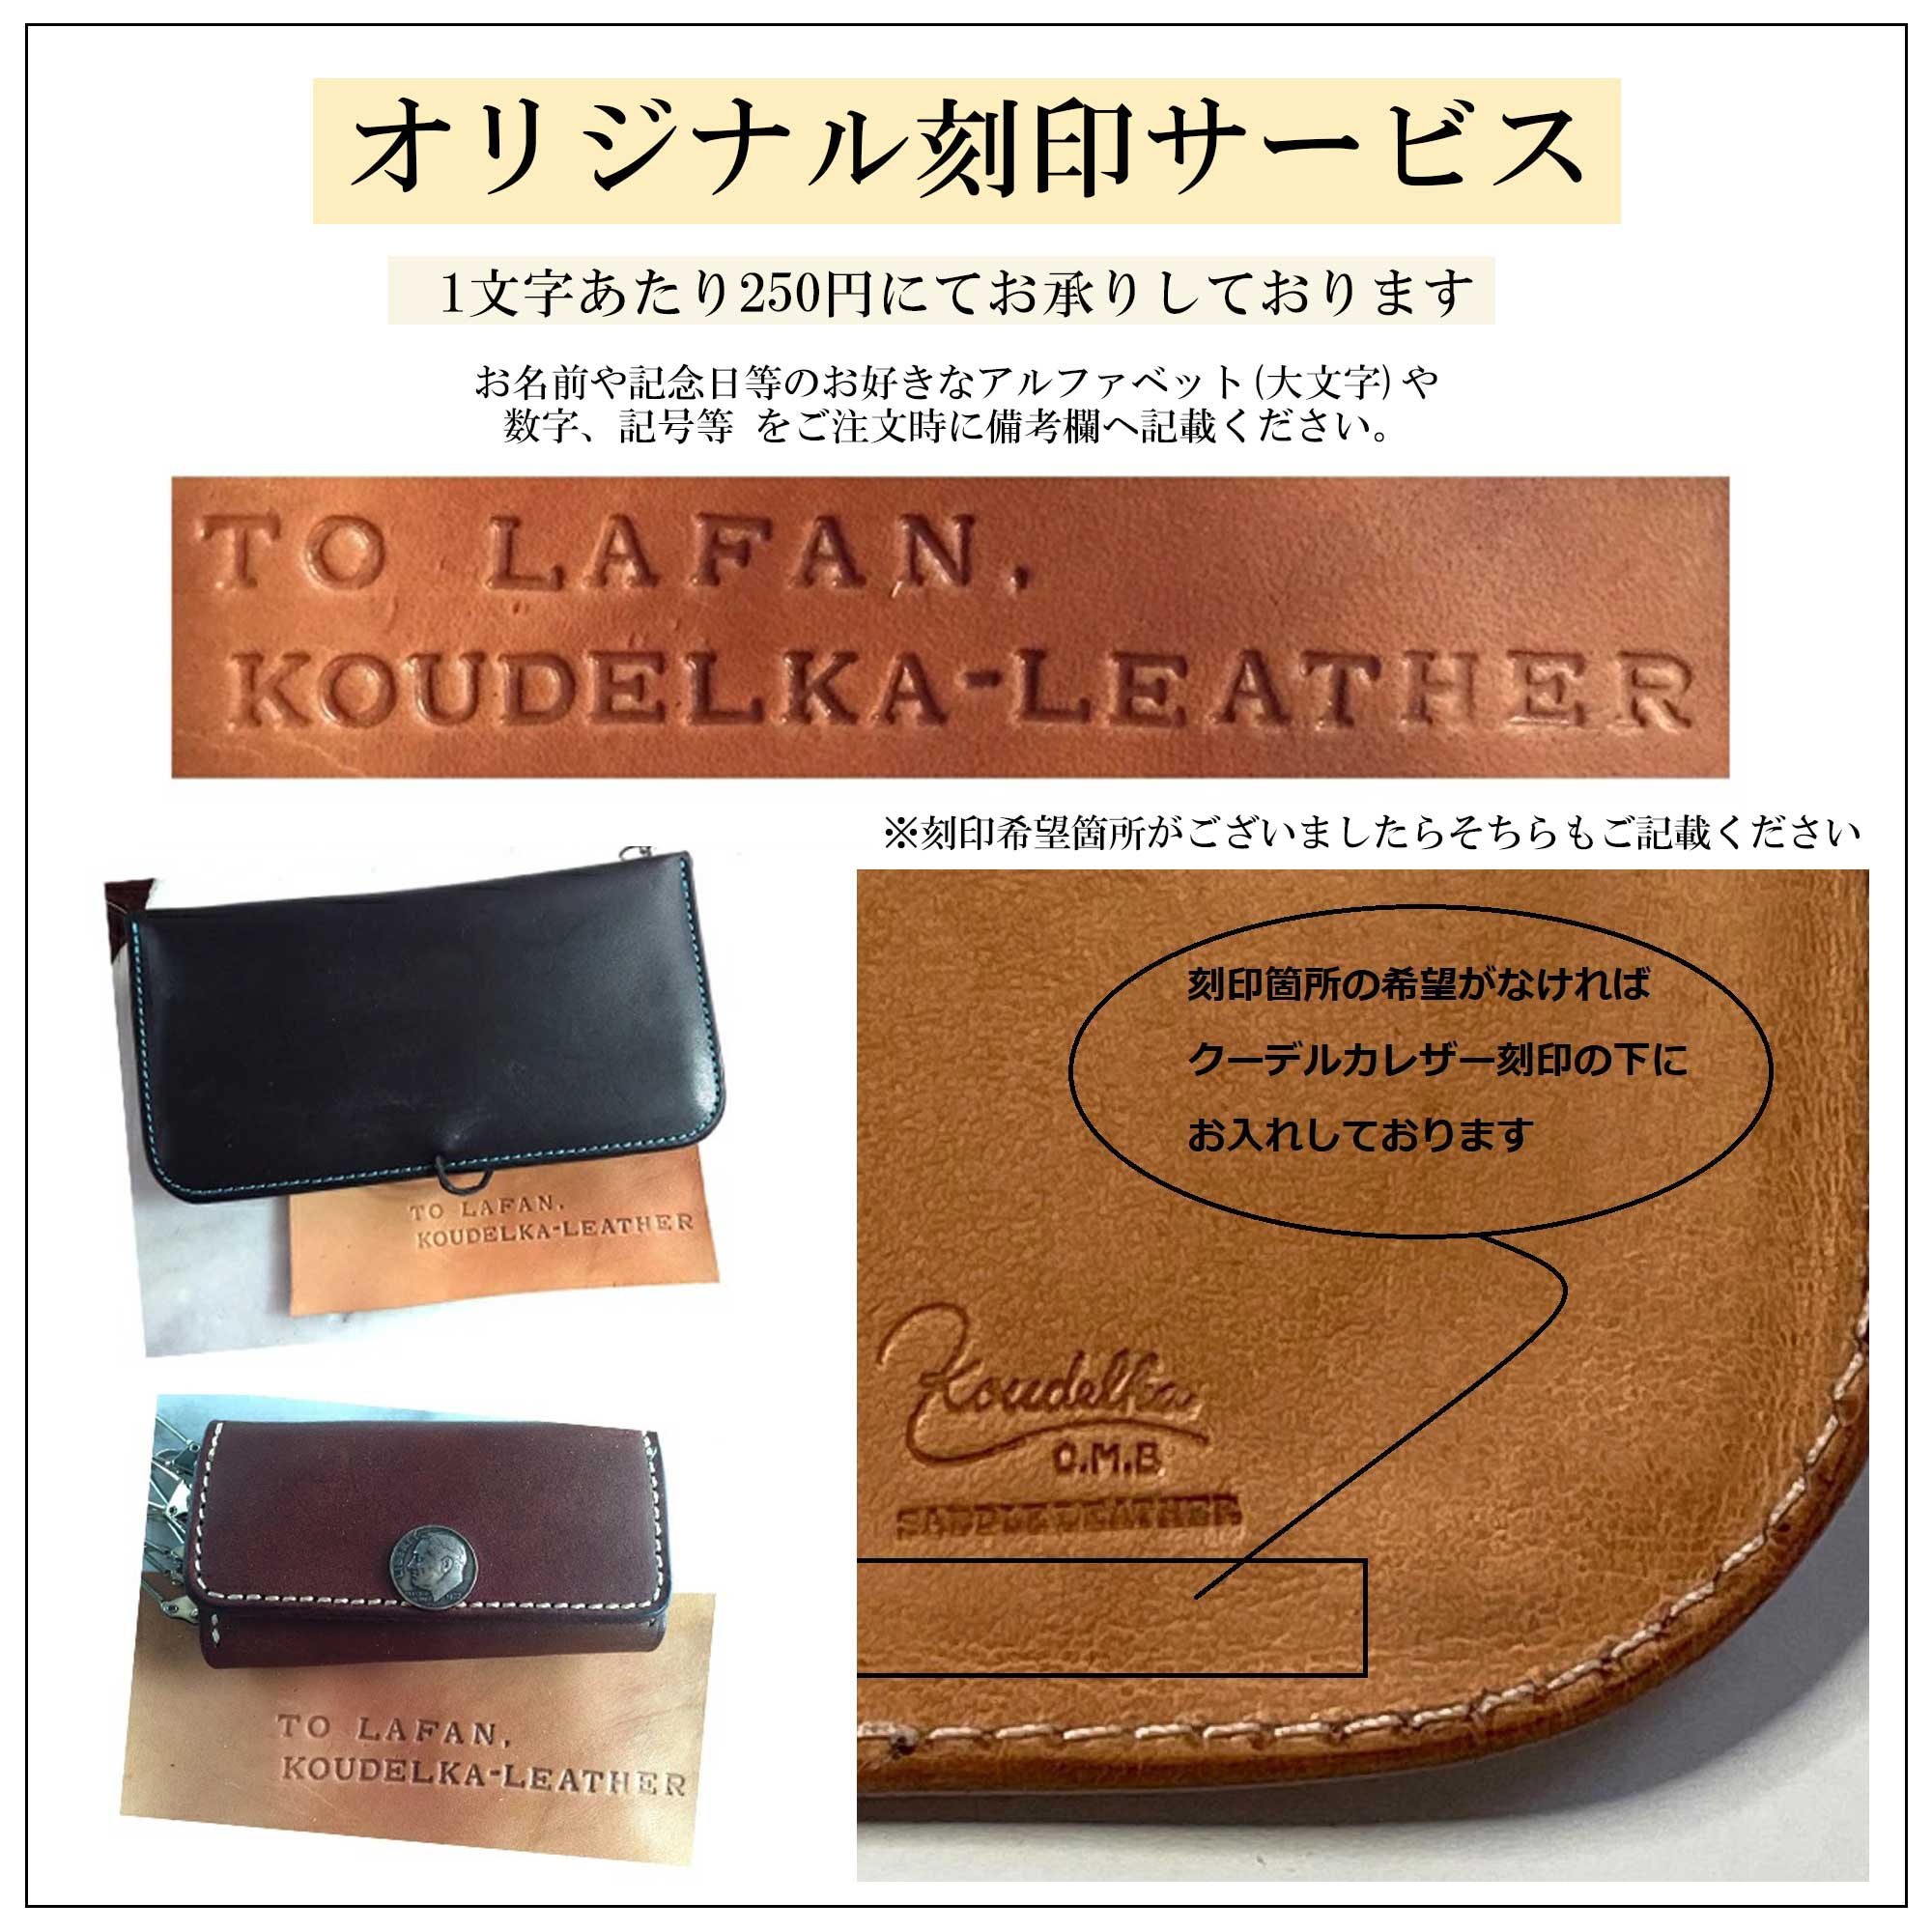 【Koudlka Leather(クーデルカ レザー)】【Sn-2a】システム手帳 M